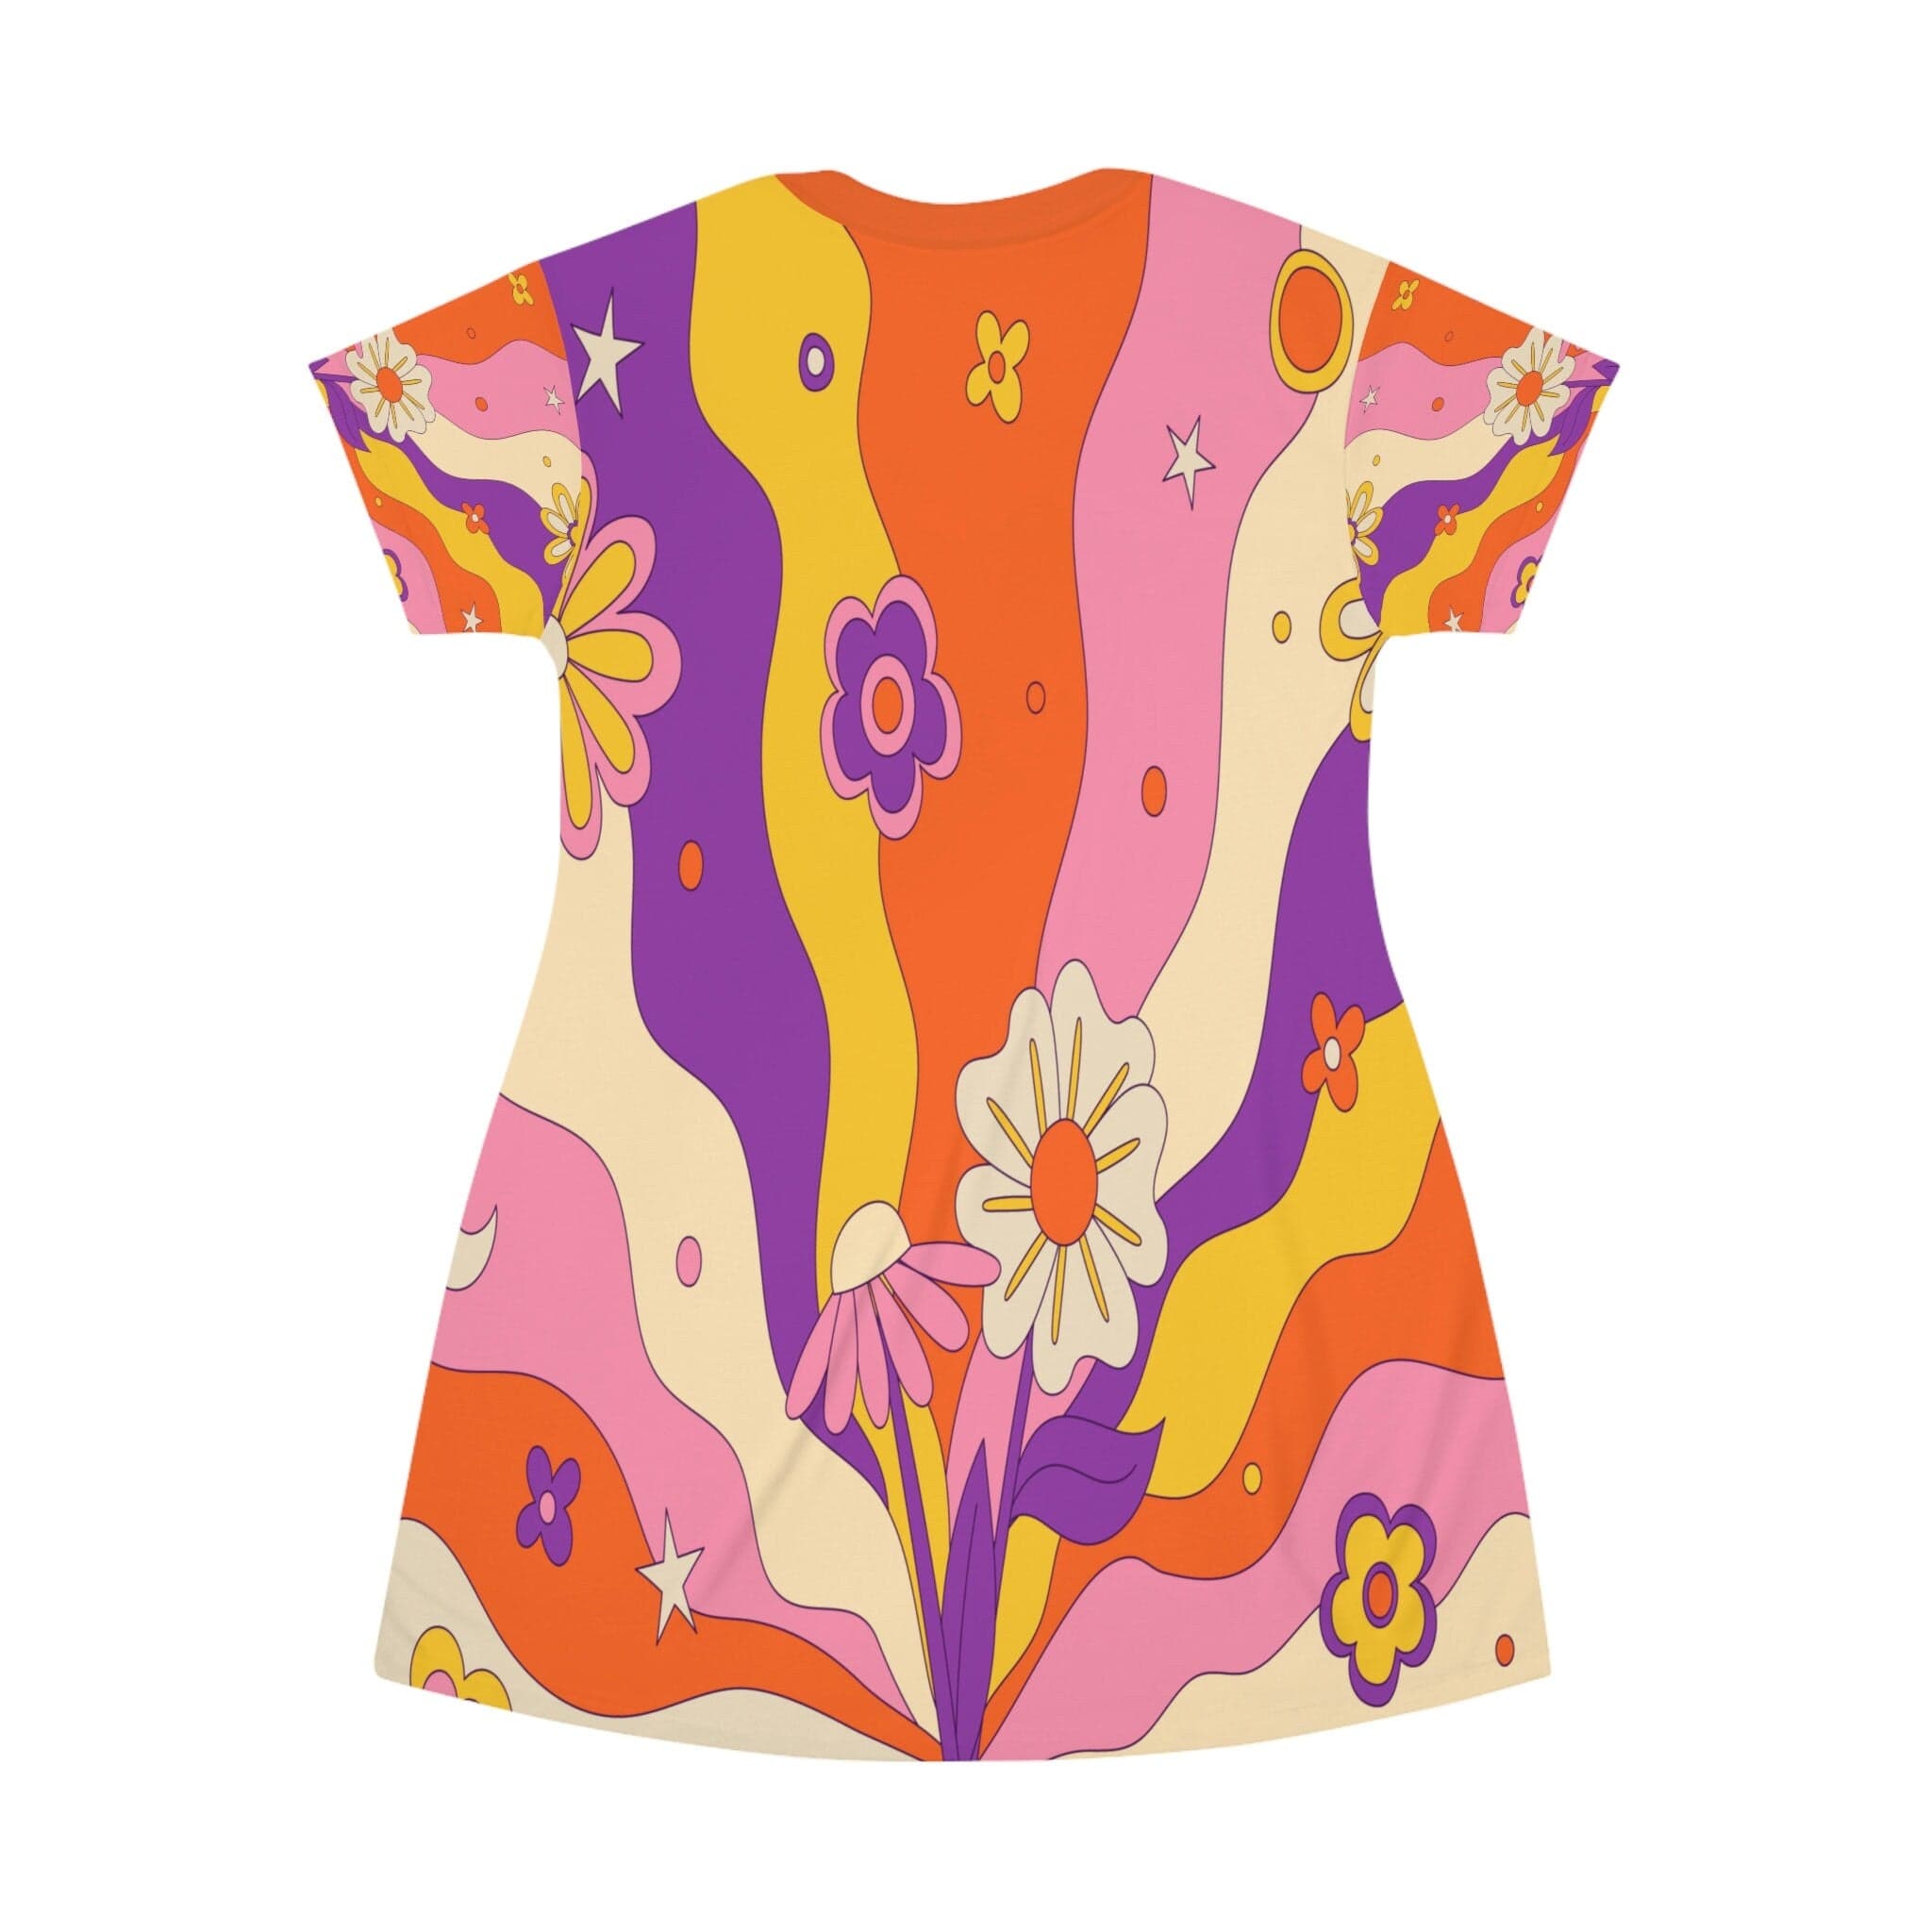 Kate McEnroe New York Retro 60s, 70s Groovy Hippie Flower Power Boho Party Dress in Mid Century Modern Beige, Burnt Orange, Mustard Yellow, Purple, Pink T-Shirt Dress L 10322600403798641003